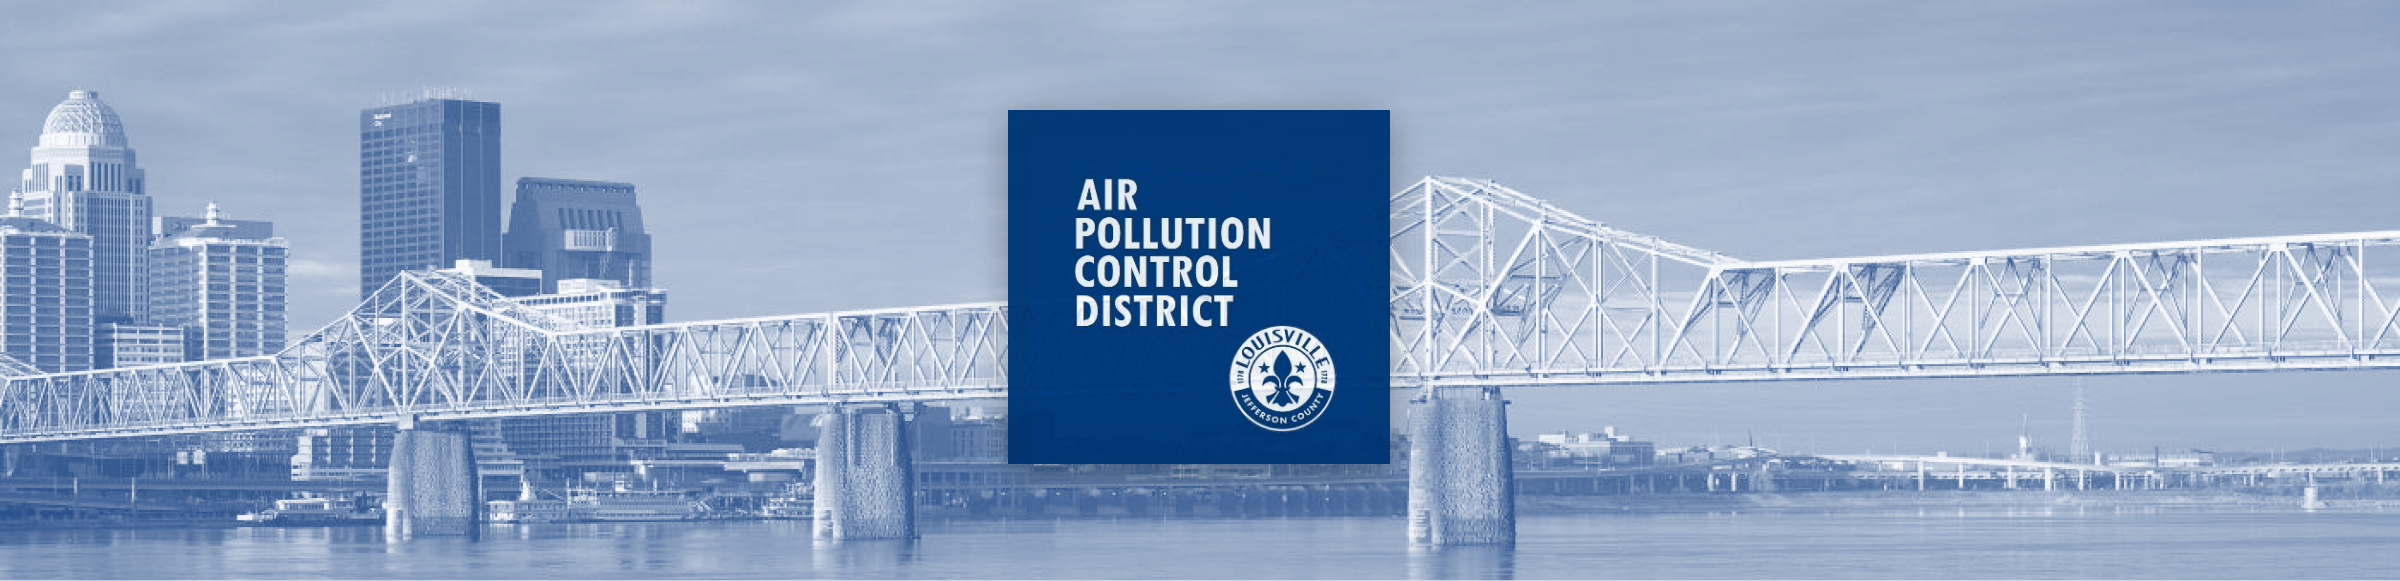 Air Pollution Control District 